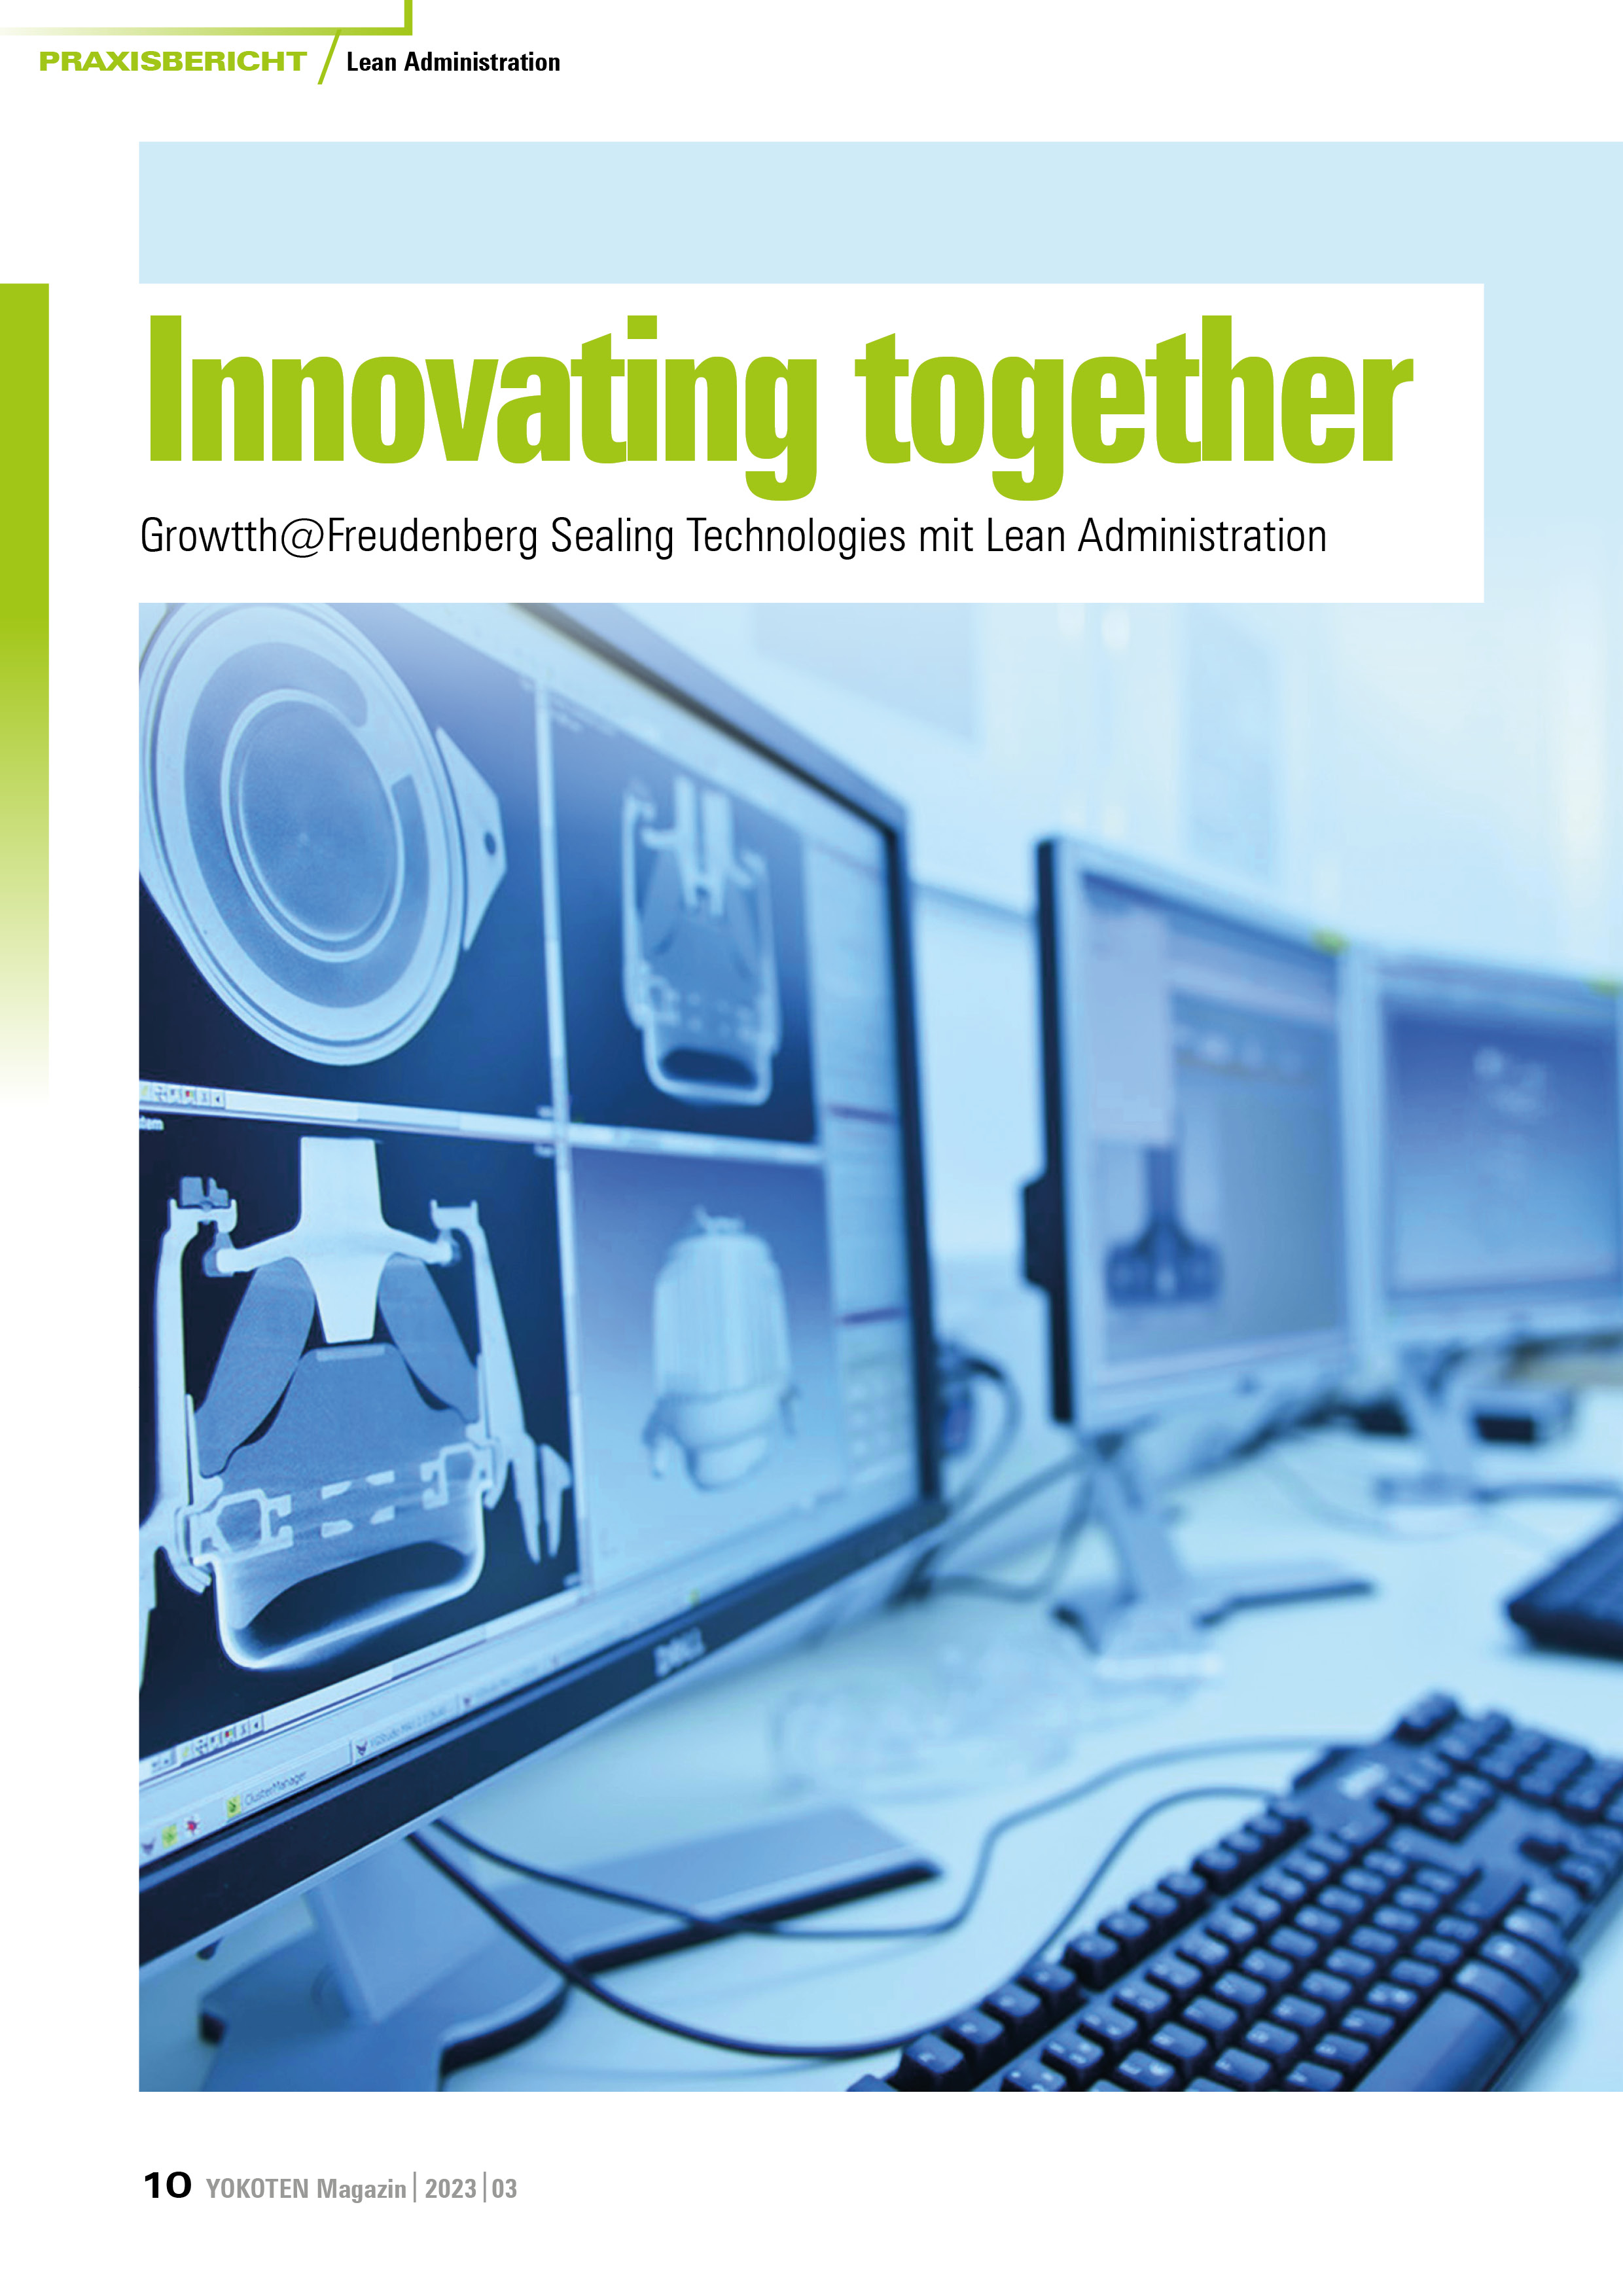 Innovating together - Lean Administration - Artikel aus Fachmagazin YOKOTEN 2023-03